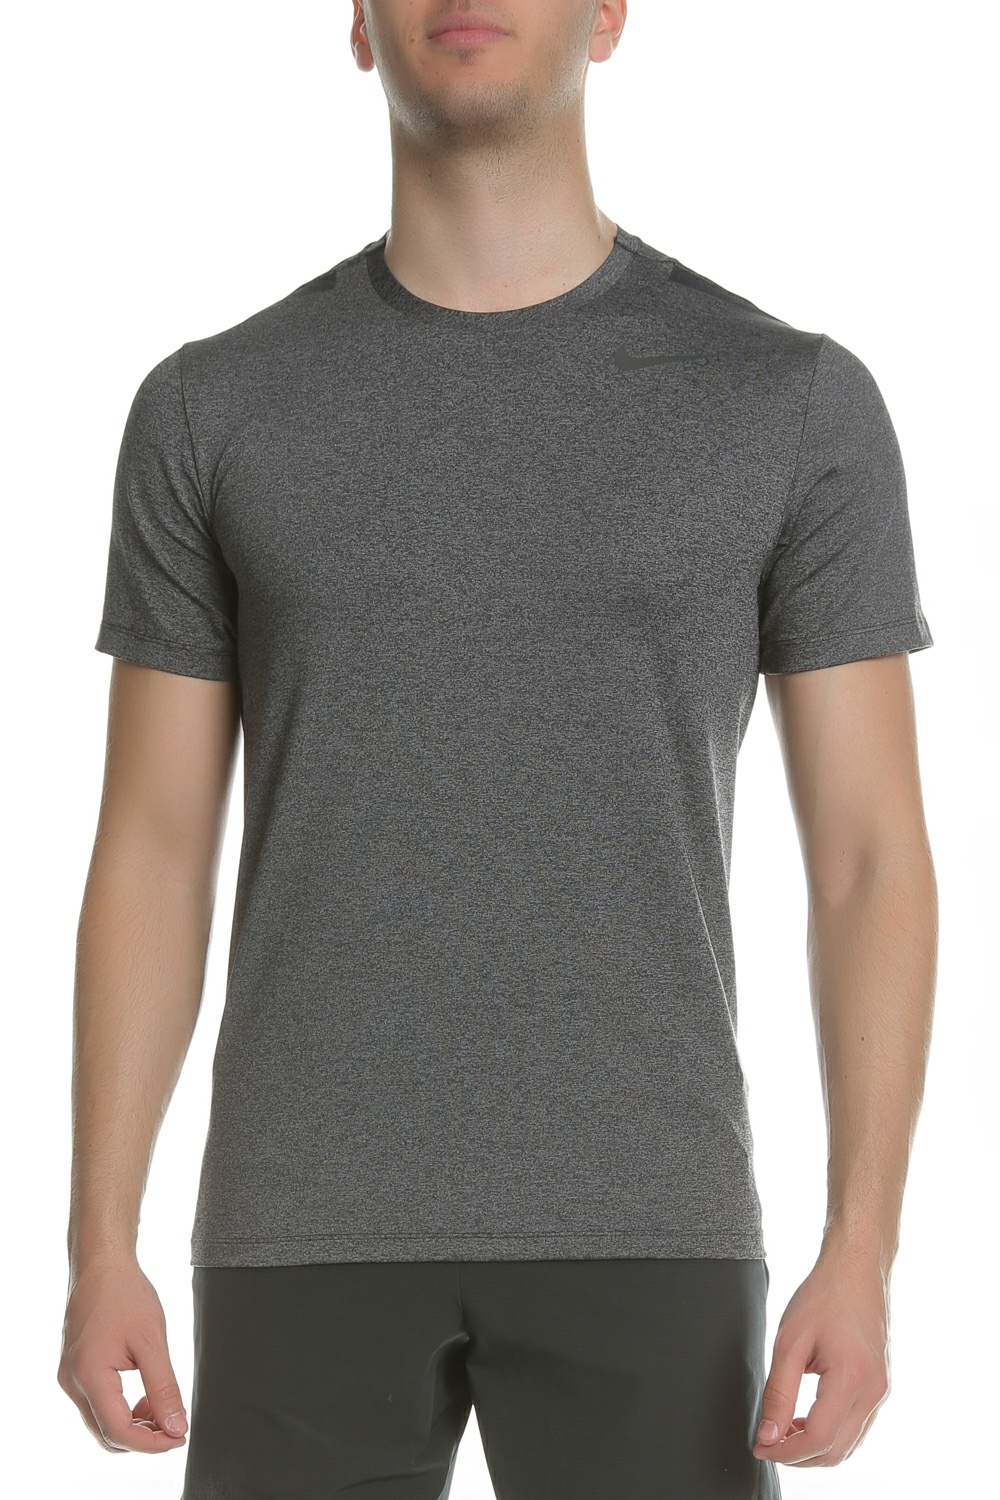 NIKE - Ανδρική κοντομάνικη μπλούζα NIKE DRY MEDALIST TOP γκρι Ανδρικά/Ρούχα/Αθλητικά/T-shirt